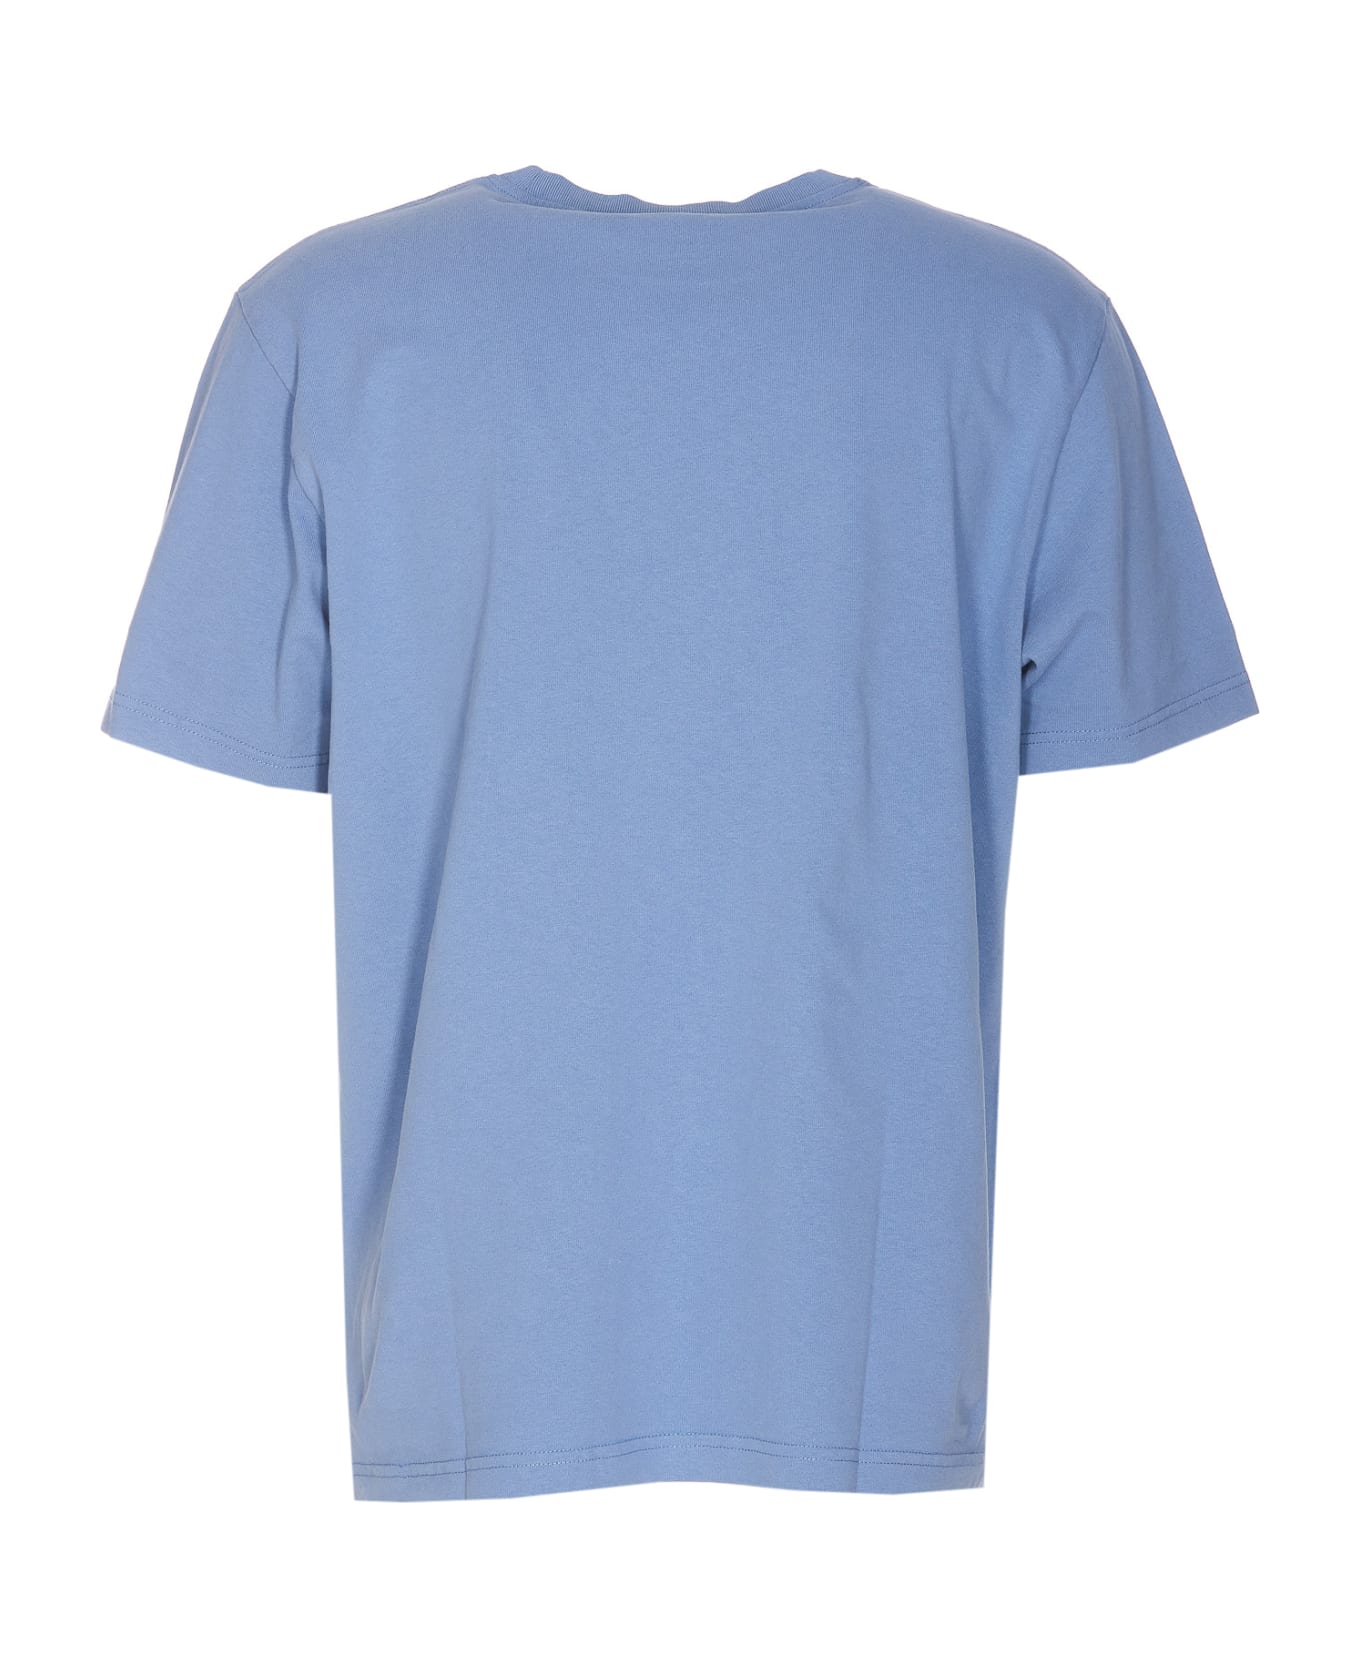 Maison Kitsuné Bold Fox Head Patch Logo T-shirt - Hampton blue